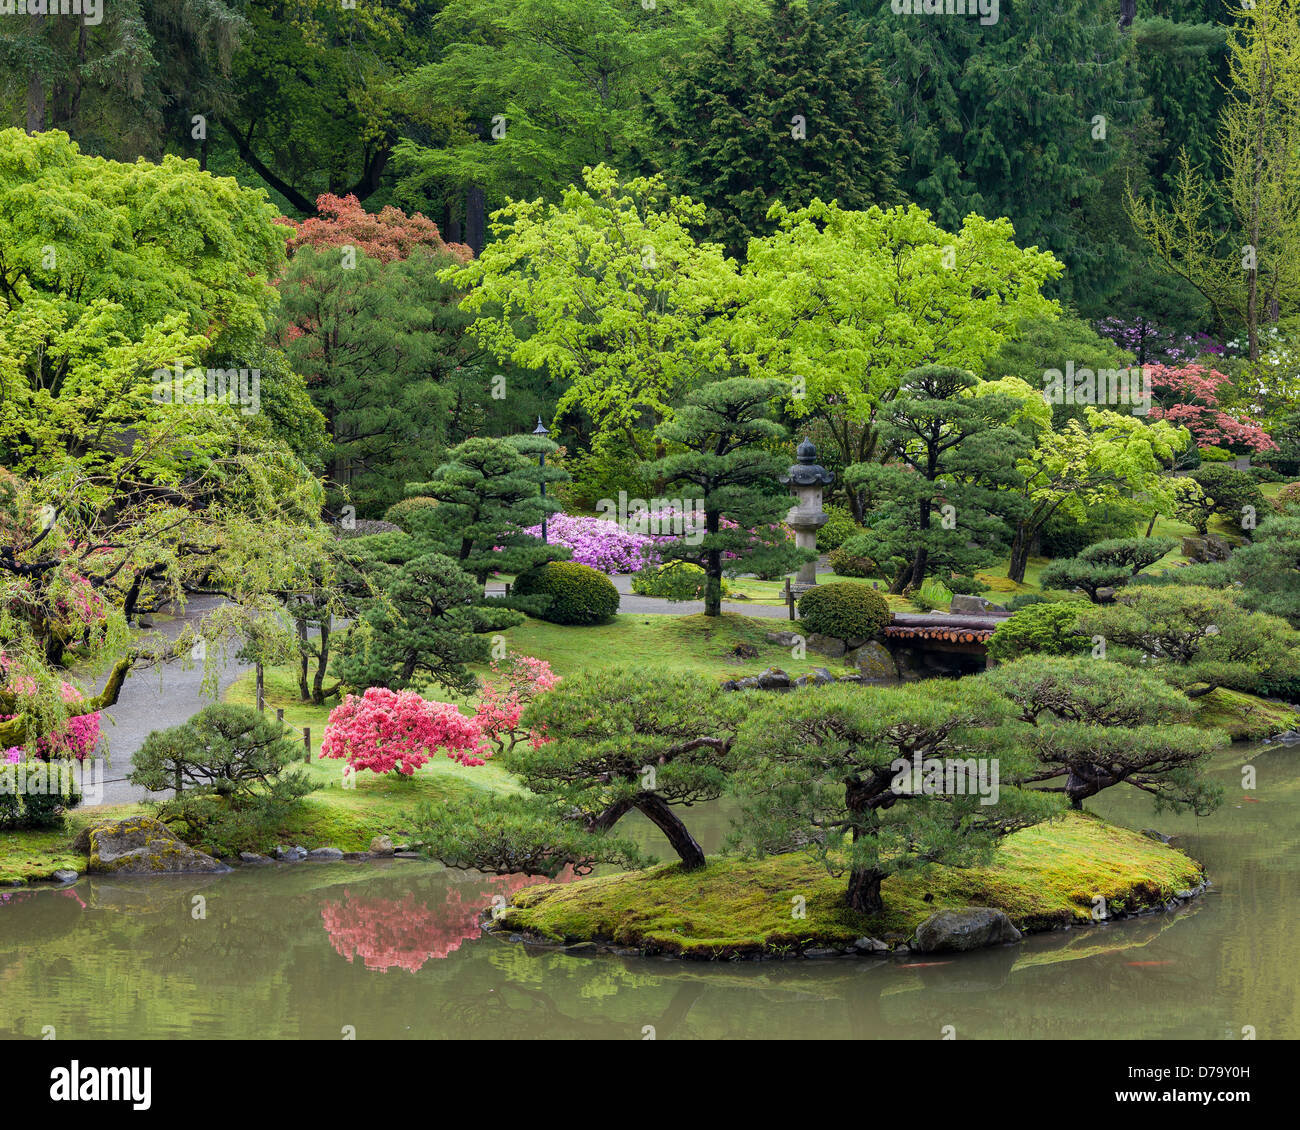 Seattle, WA: Spring view of the lake of the Japanese Garden in Washington Park Arboretum Stock Photo